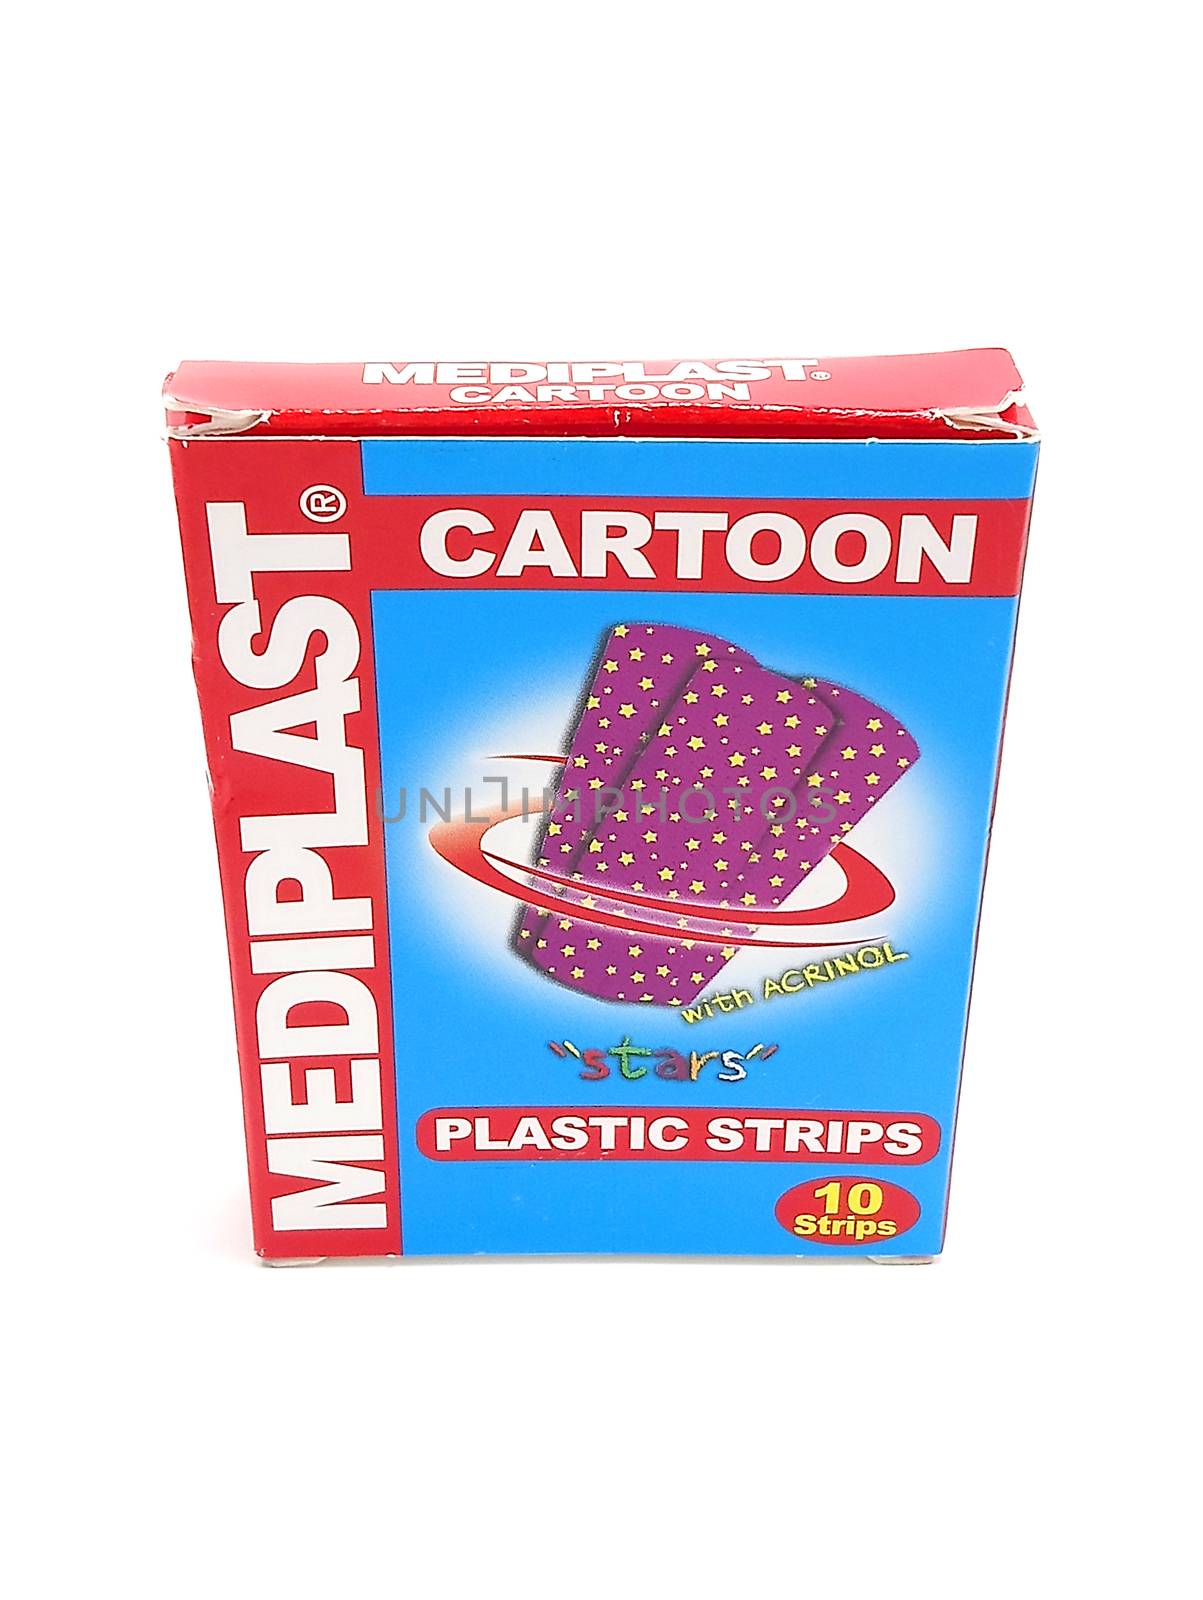 Mediplast cartoon plastic strips in Manila, Philippines by imwaltersy